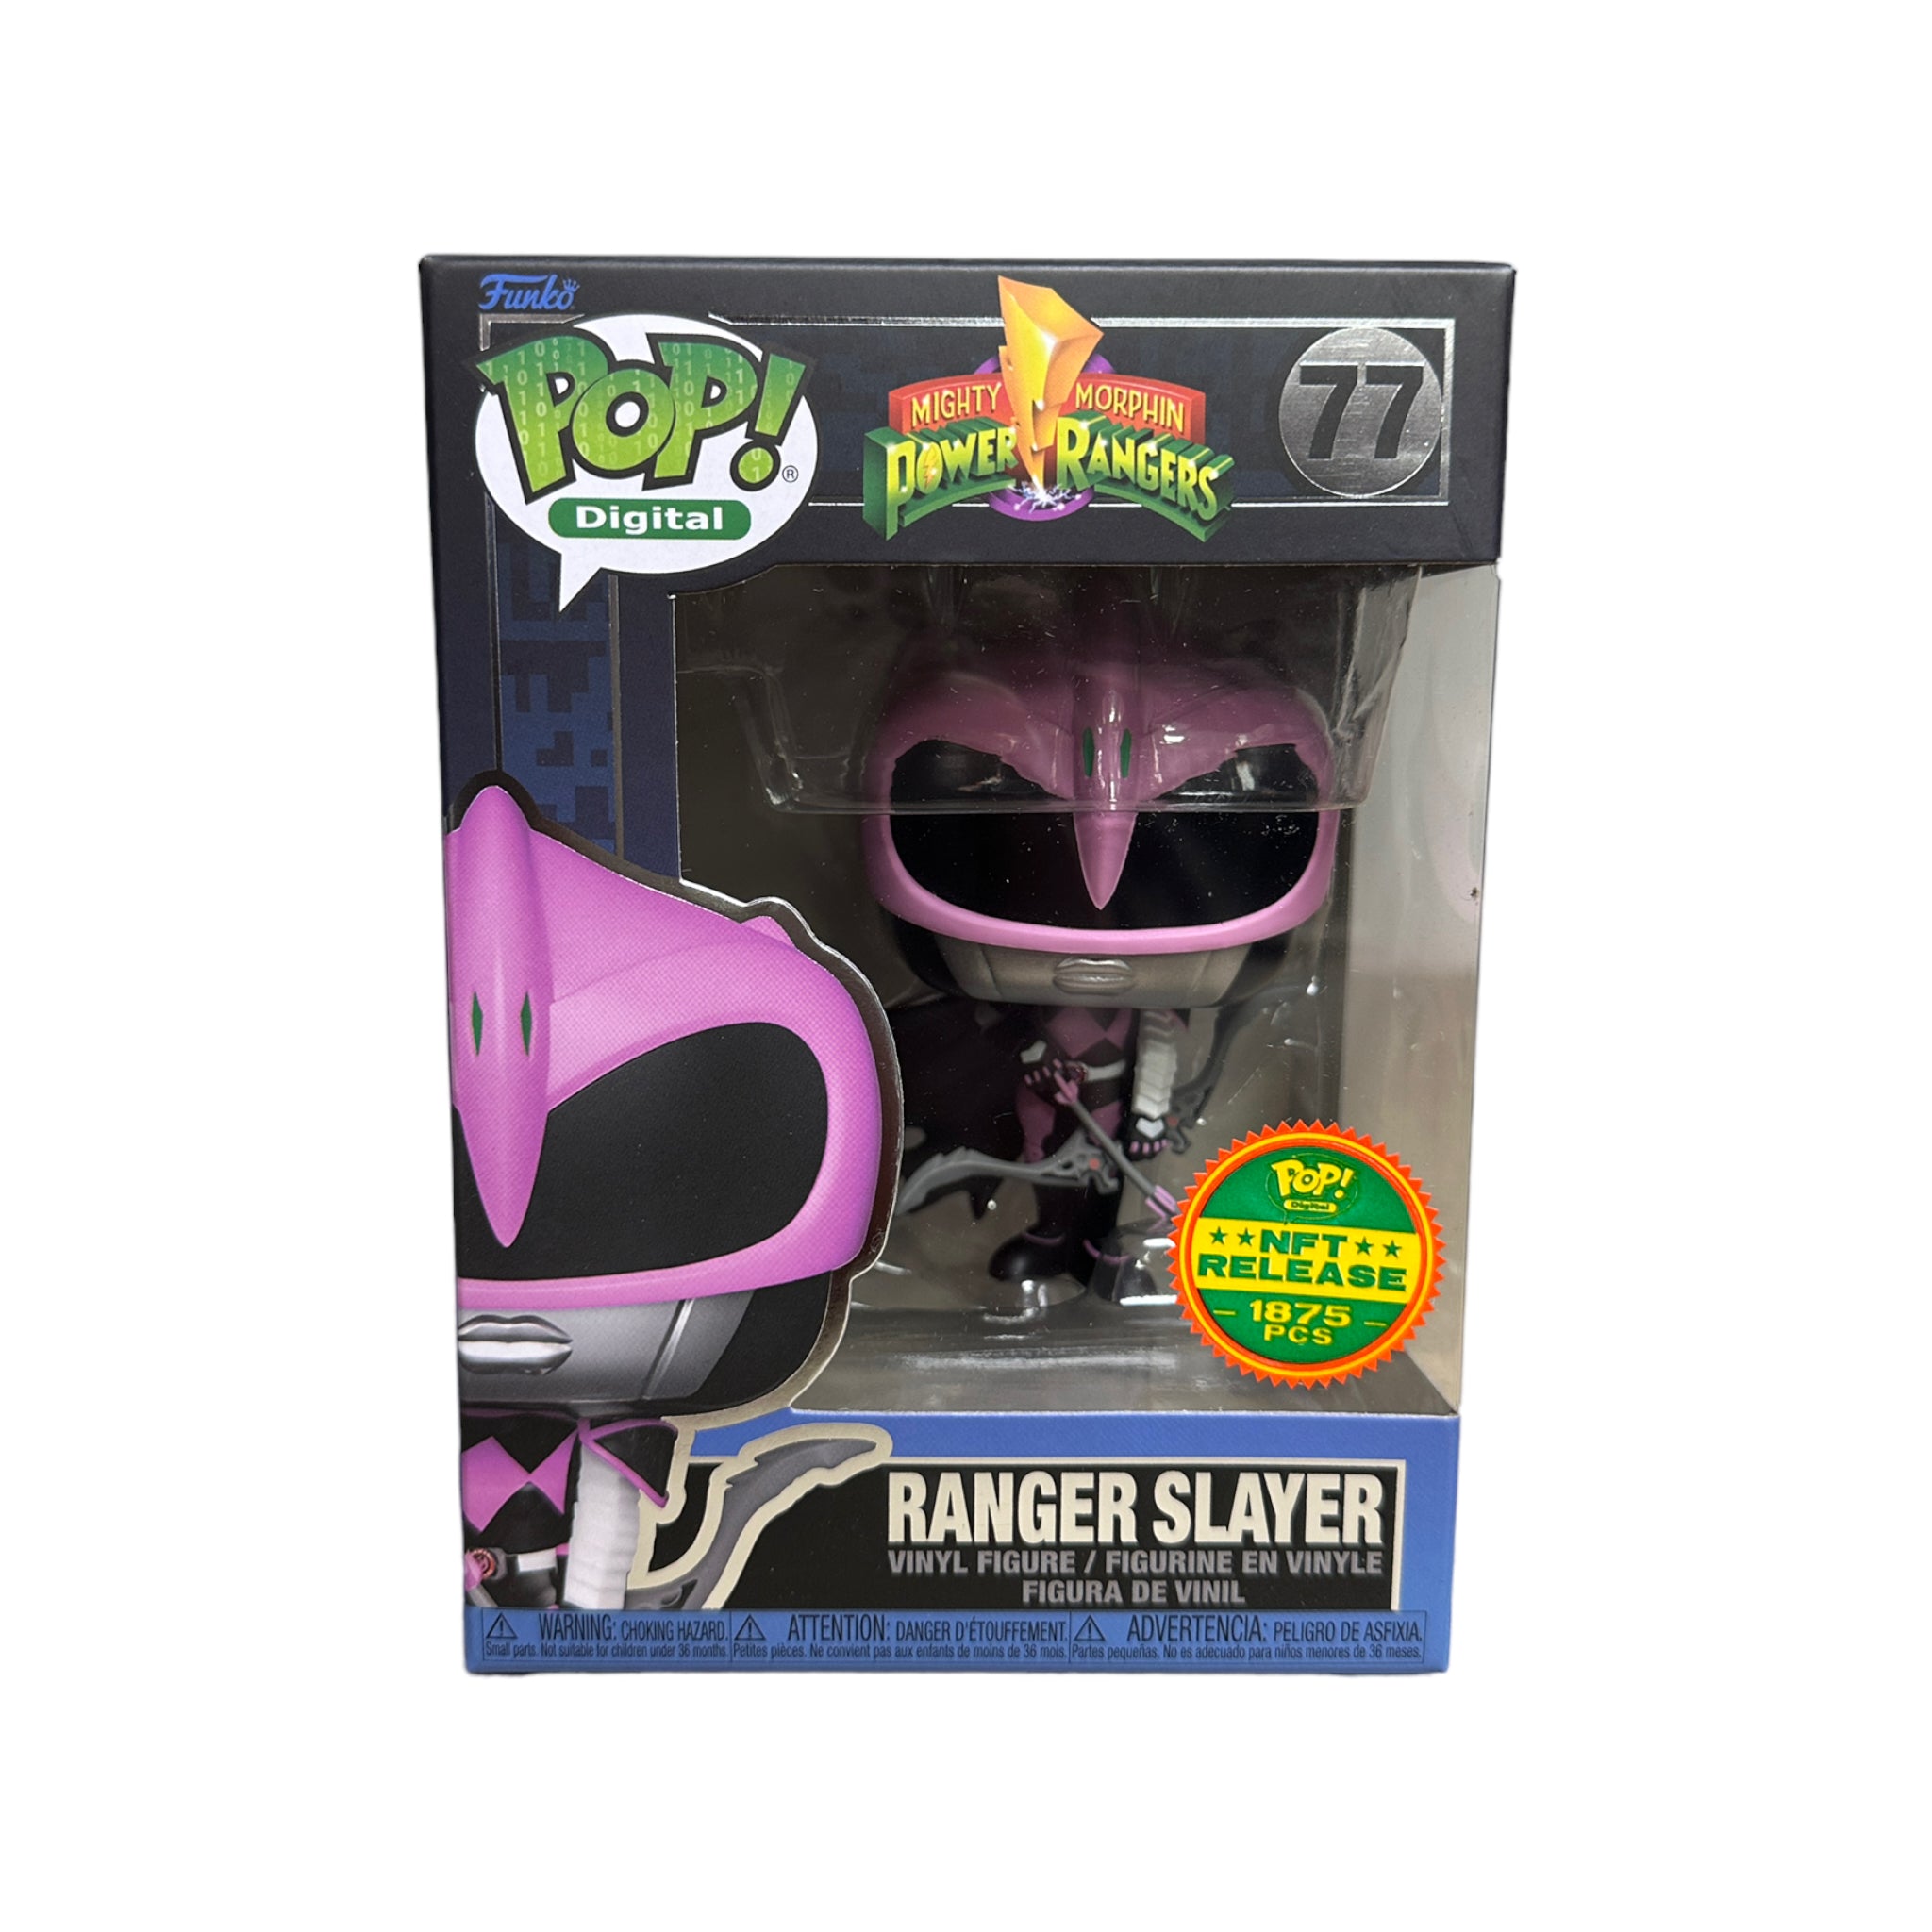 Ranger Slayer #77 Funko Pop! - Mighty Morphin Power Rangers - NFT Release Exclusive LE1875 Pcs - Condition 9/10